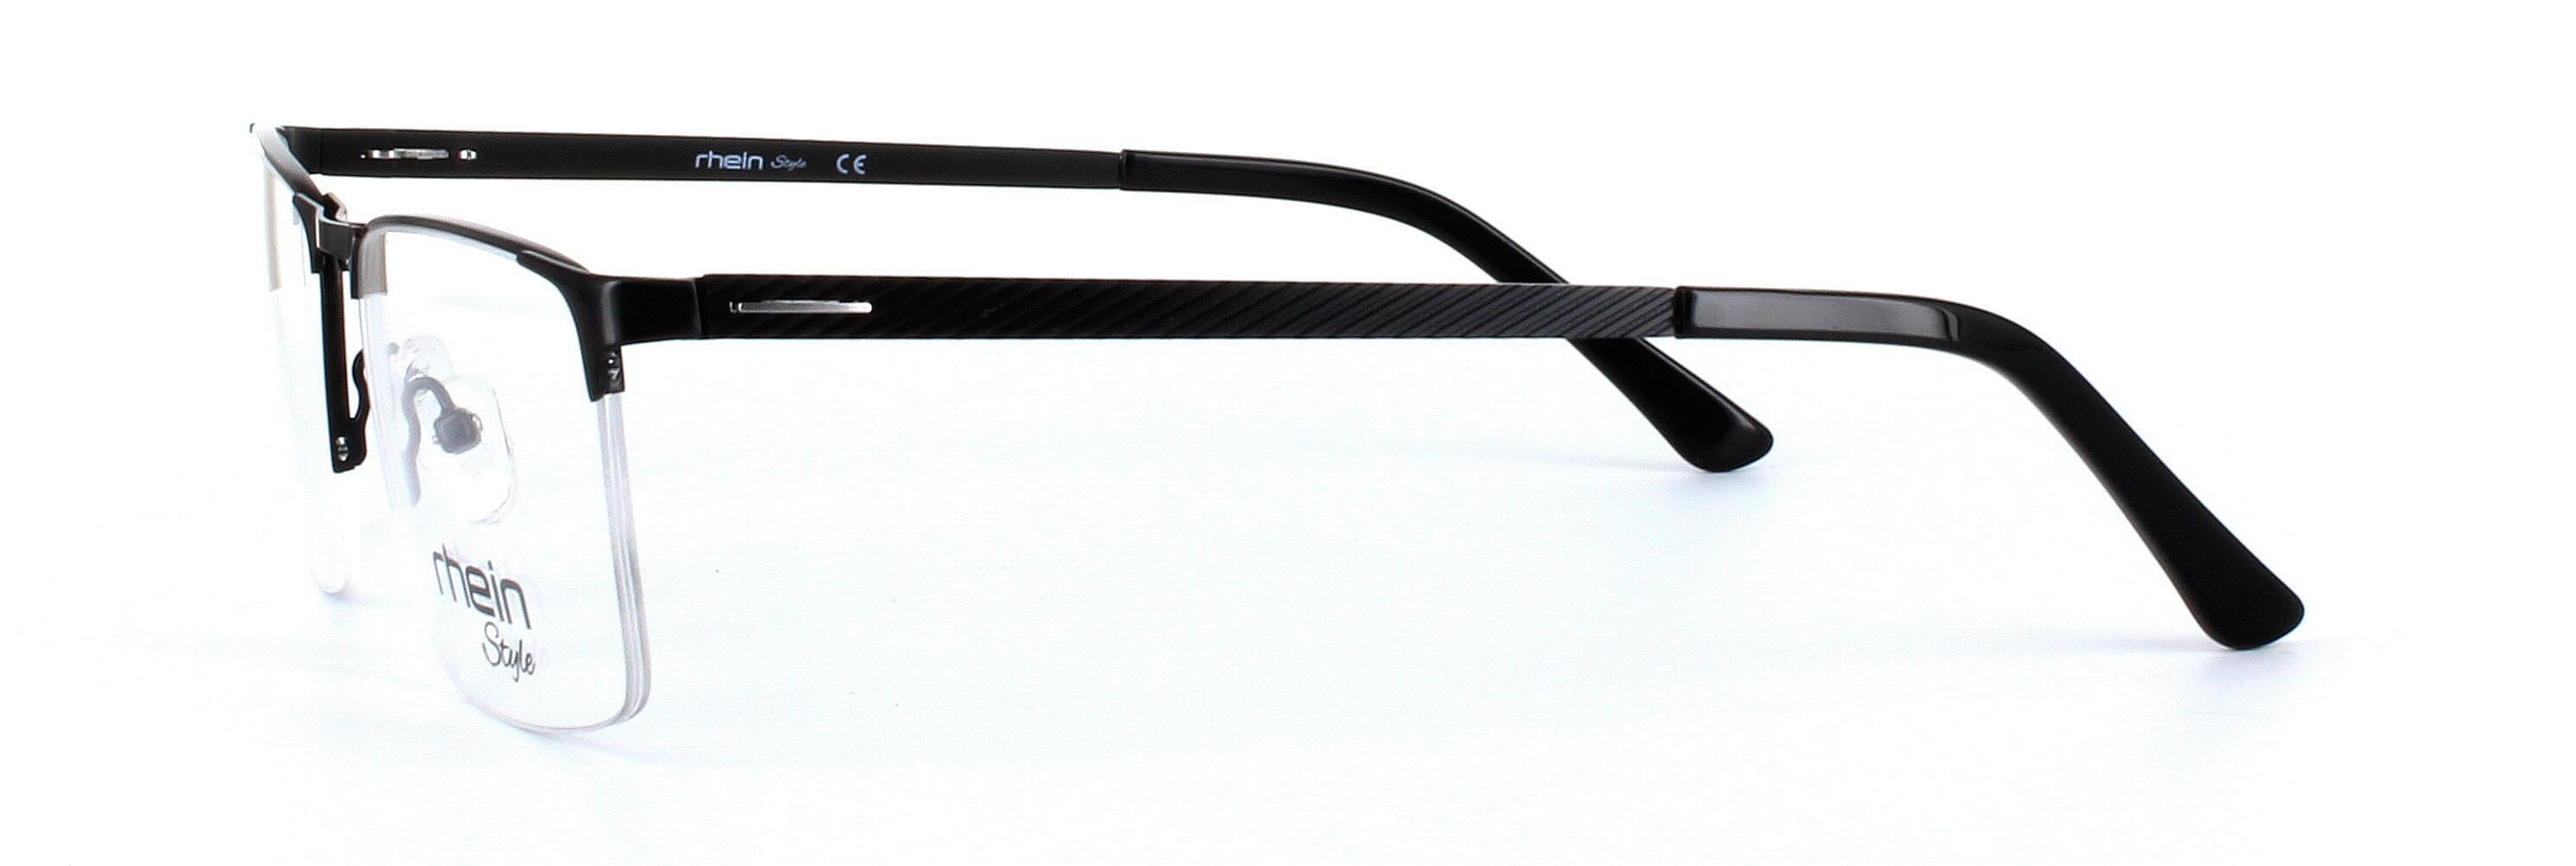 Mansell Matt Black Semi Rimless Rectangular Metal Glasses - Image View 2